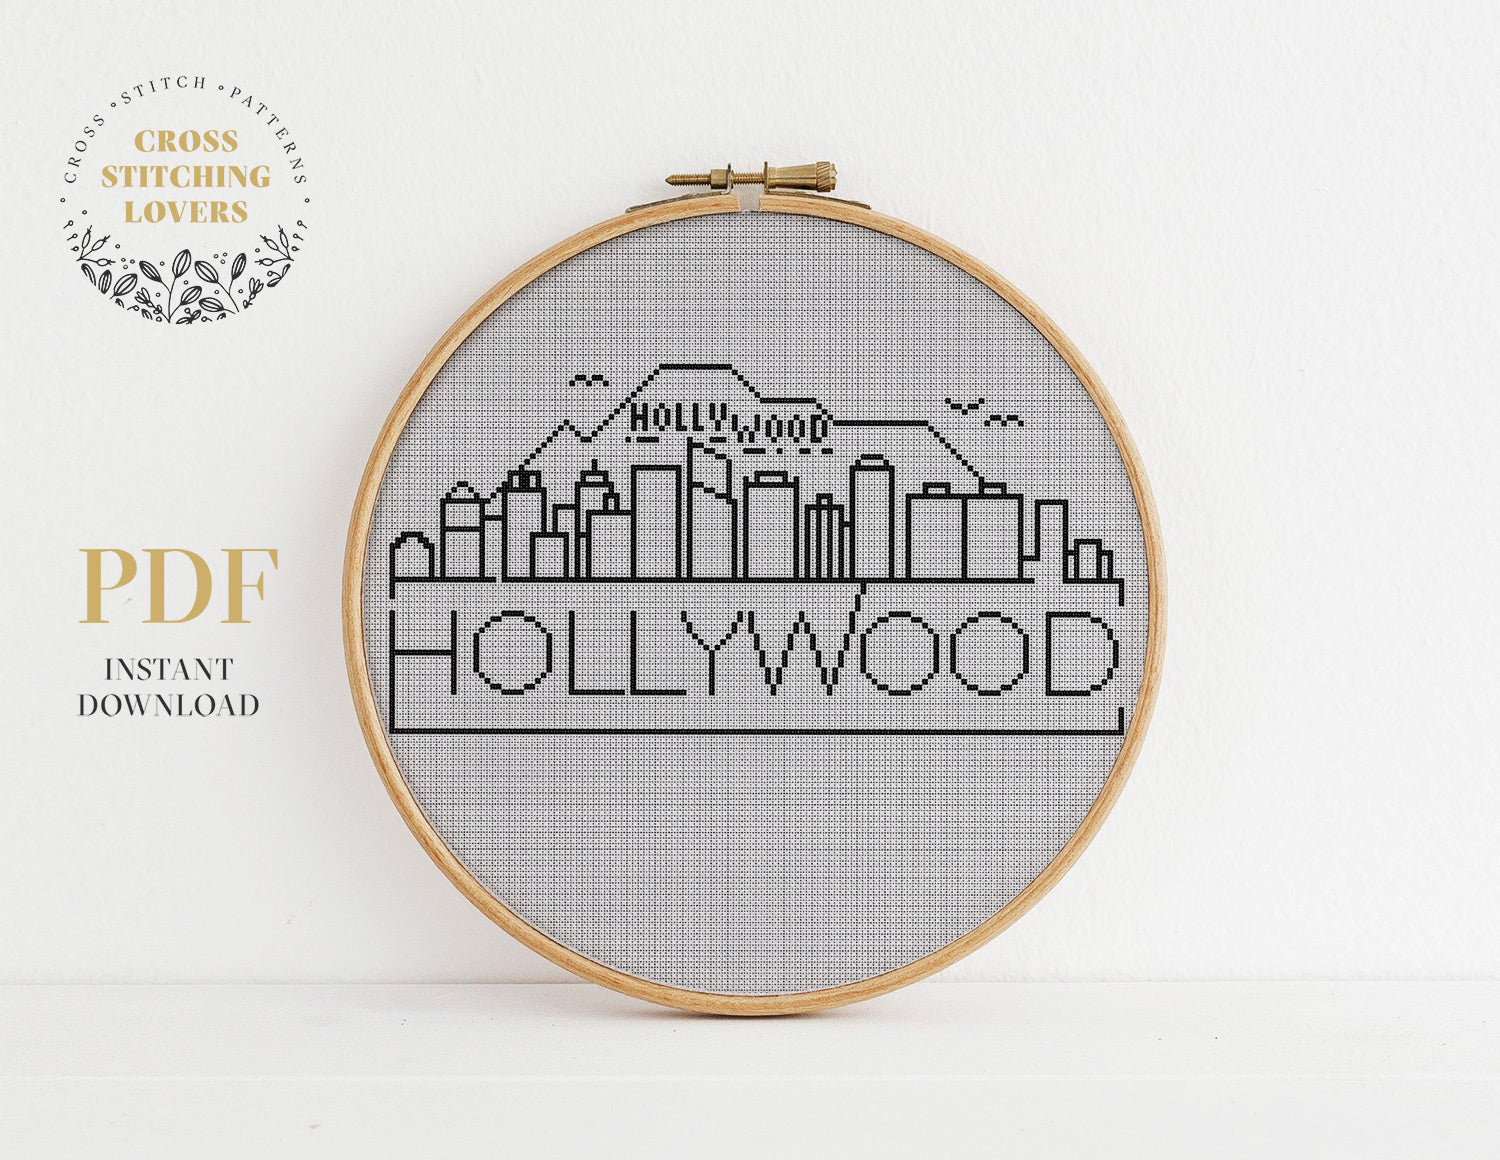 Hollywood - Cross stitch pattern